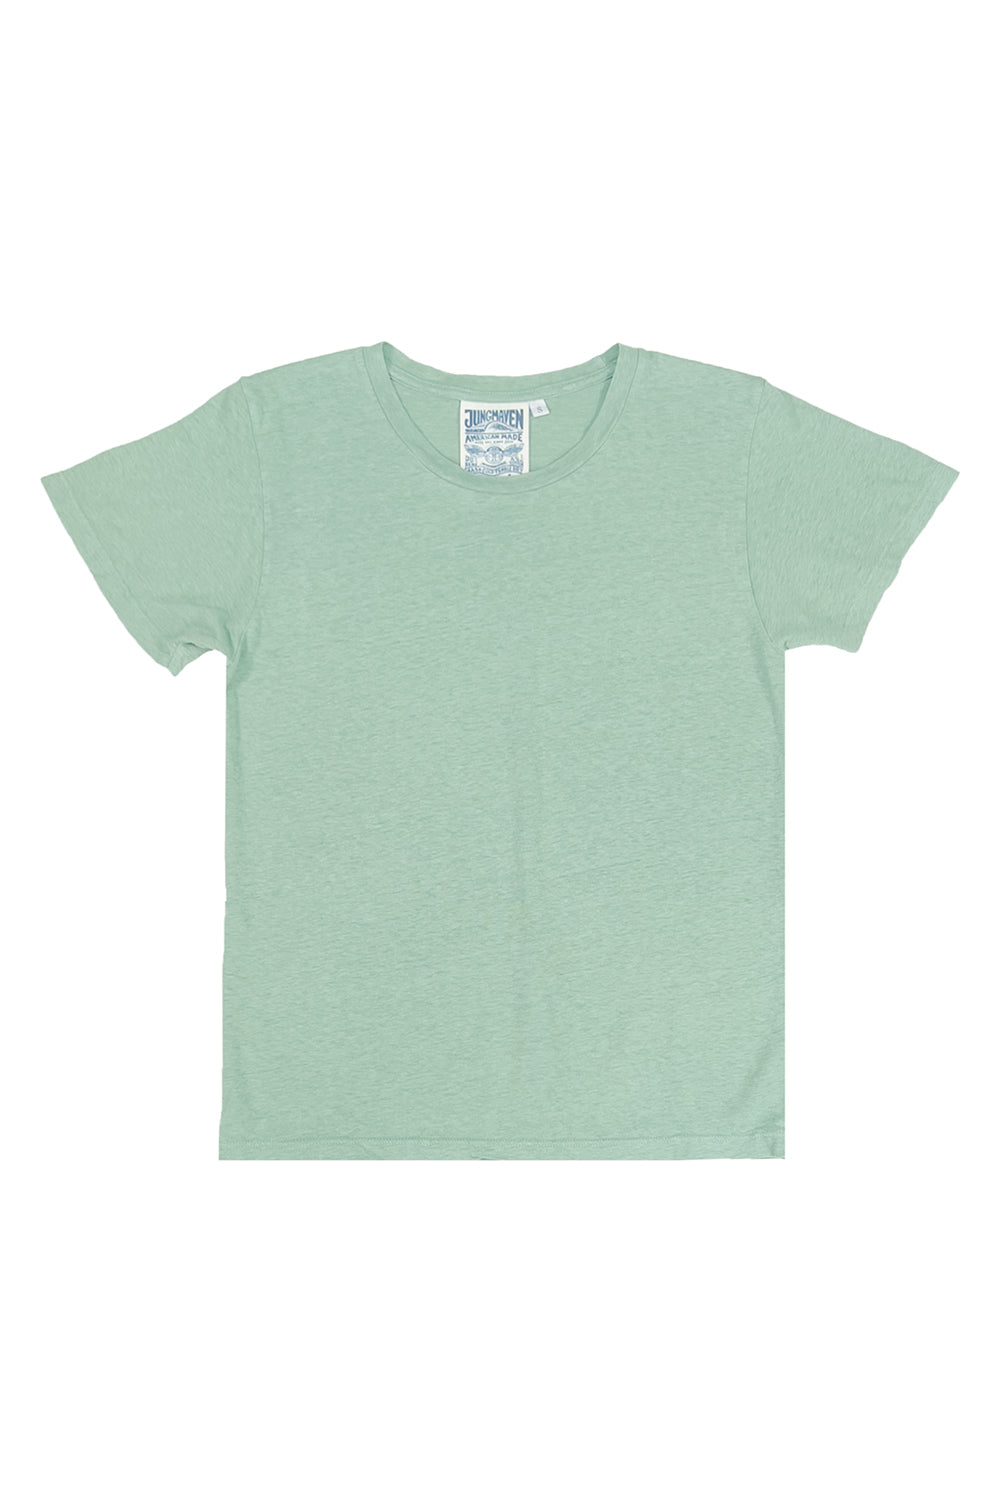 Lorel Tee - Sale Colors | Jungmaven Hemp Clothing & Accessories / Color: Sage Green